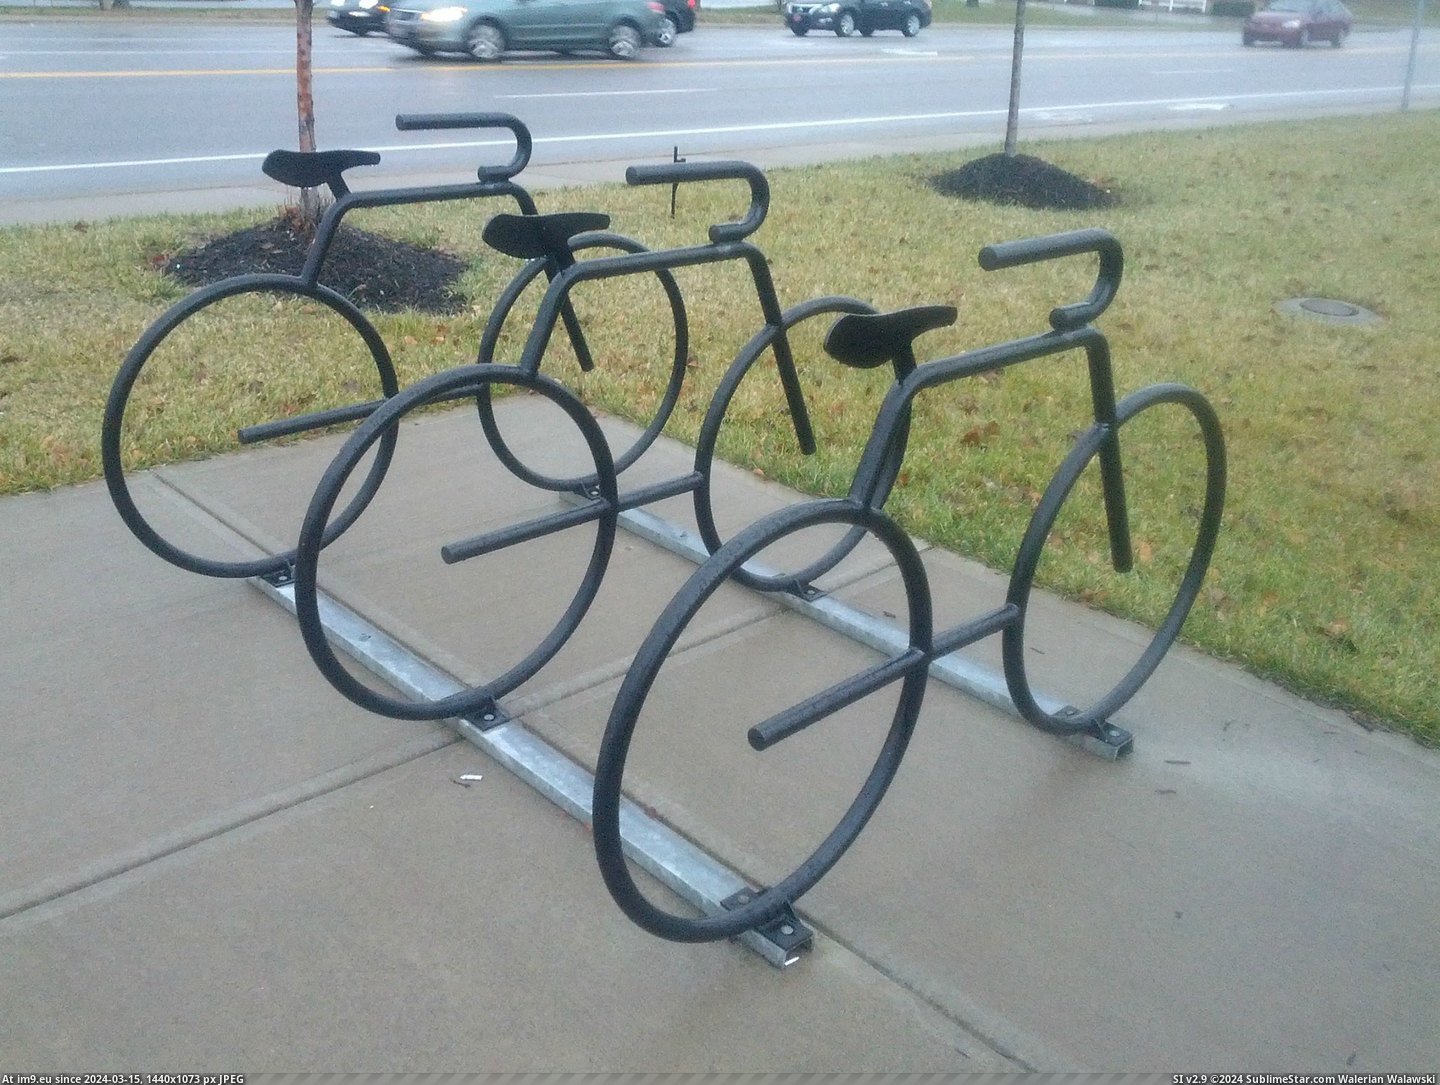 #Bike #Rack #Bikes #Shaped [Mildlyinteresting] This bike rack is shaped like bikes. 2 Pic. (Obraz z album My r/MILDLYINTERESTING favs))